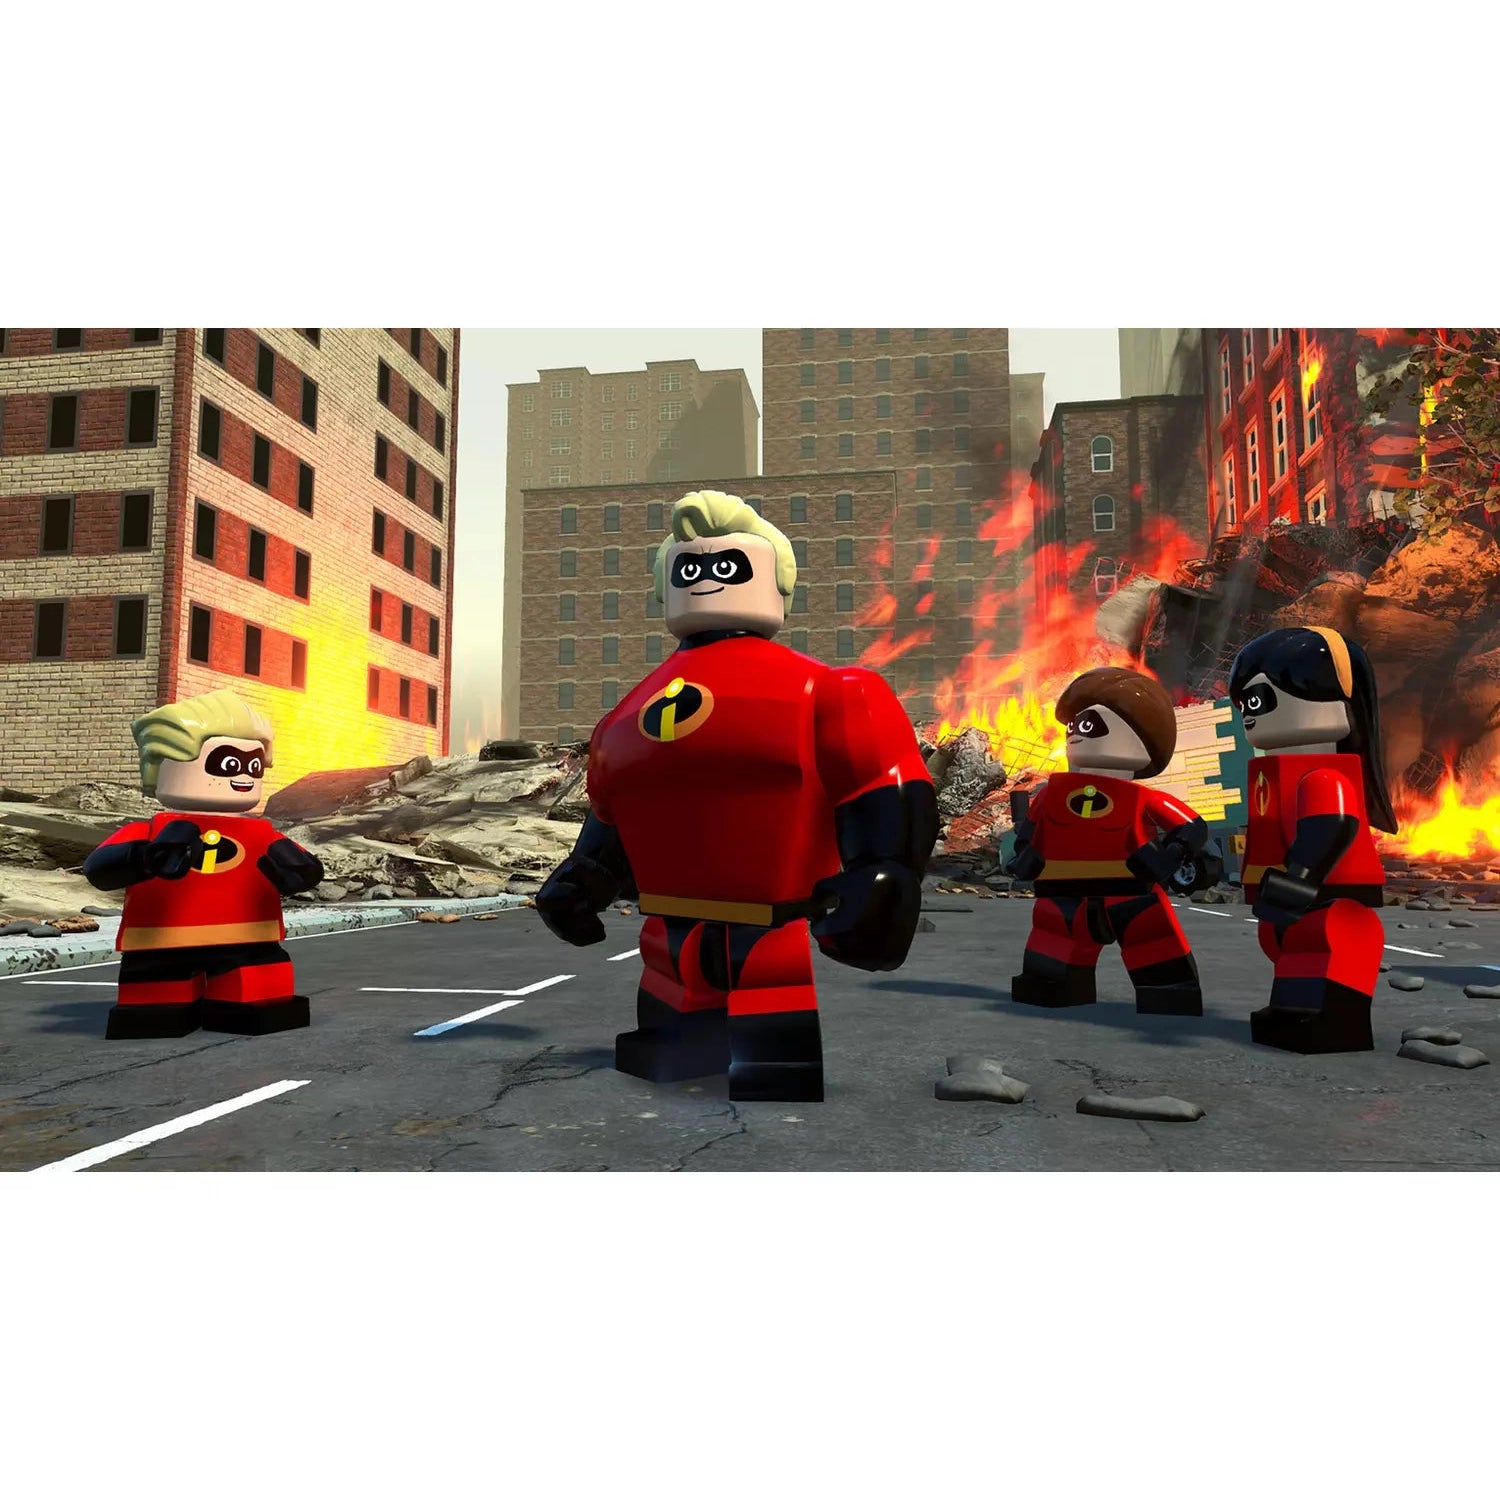 Lego Incredibles (PS4)